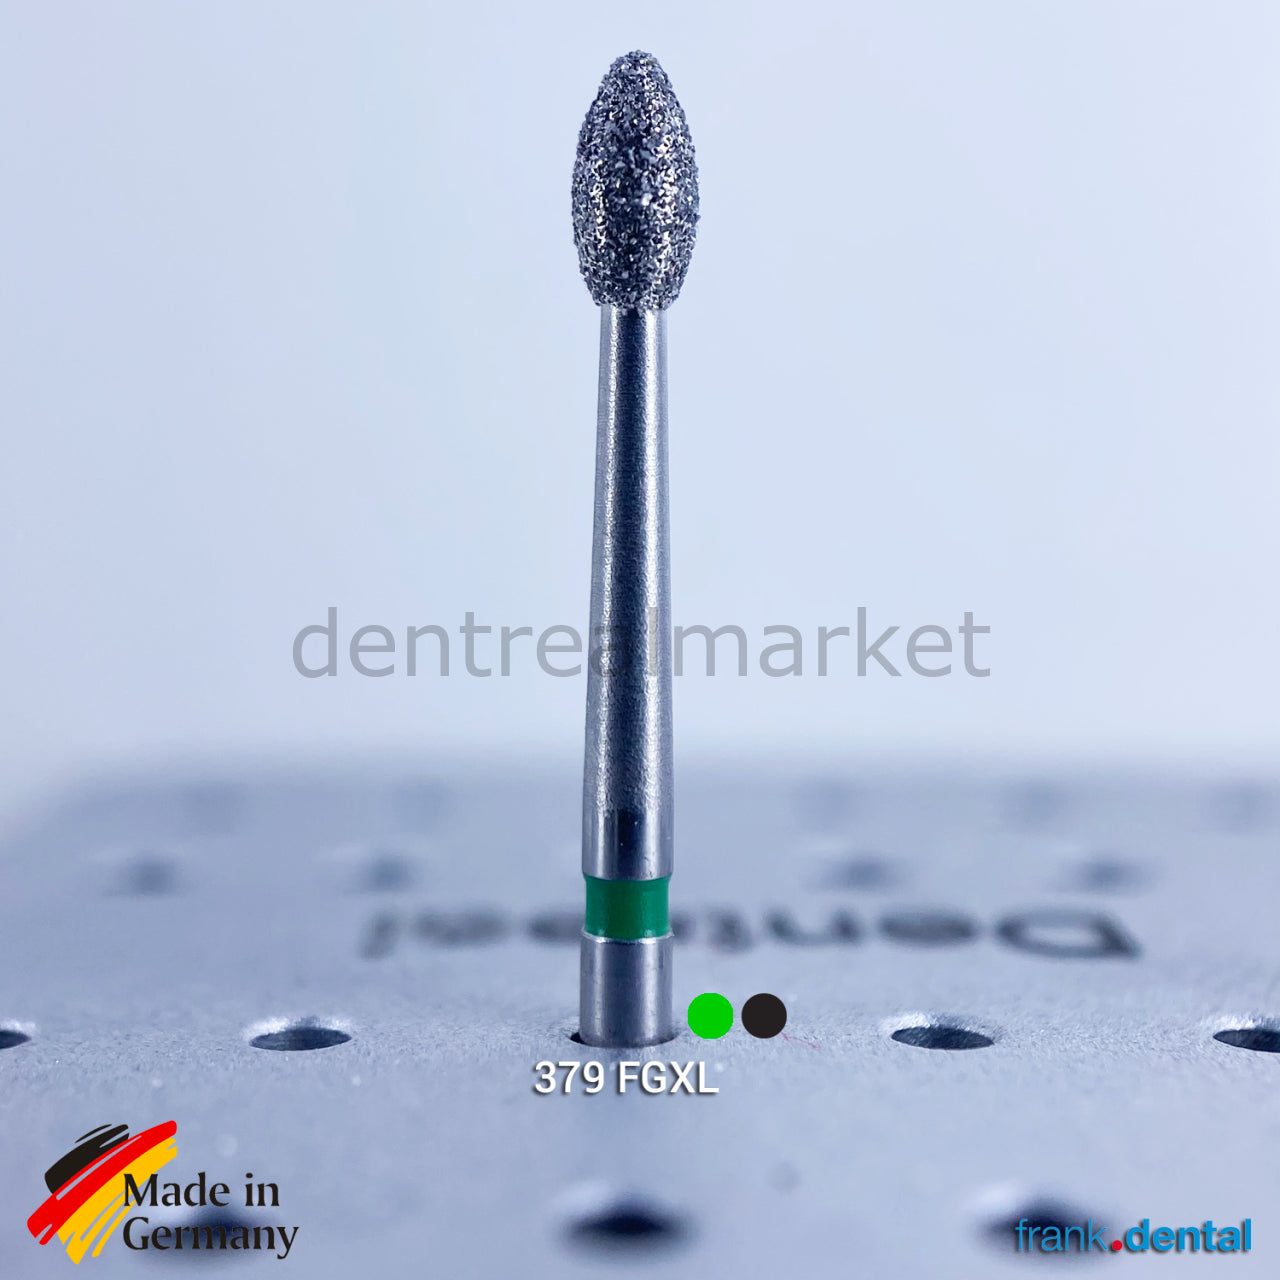 Dental Natural Diamond Bur - 379 FGXL - Pins - 5 Pcs